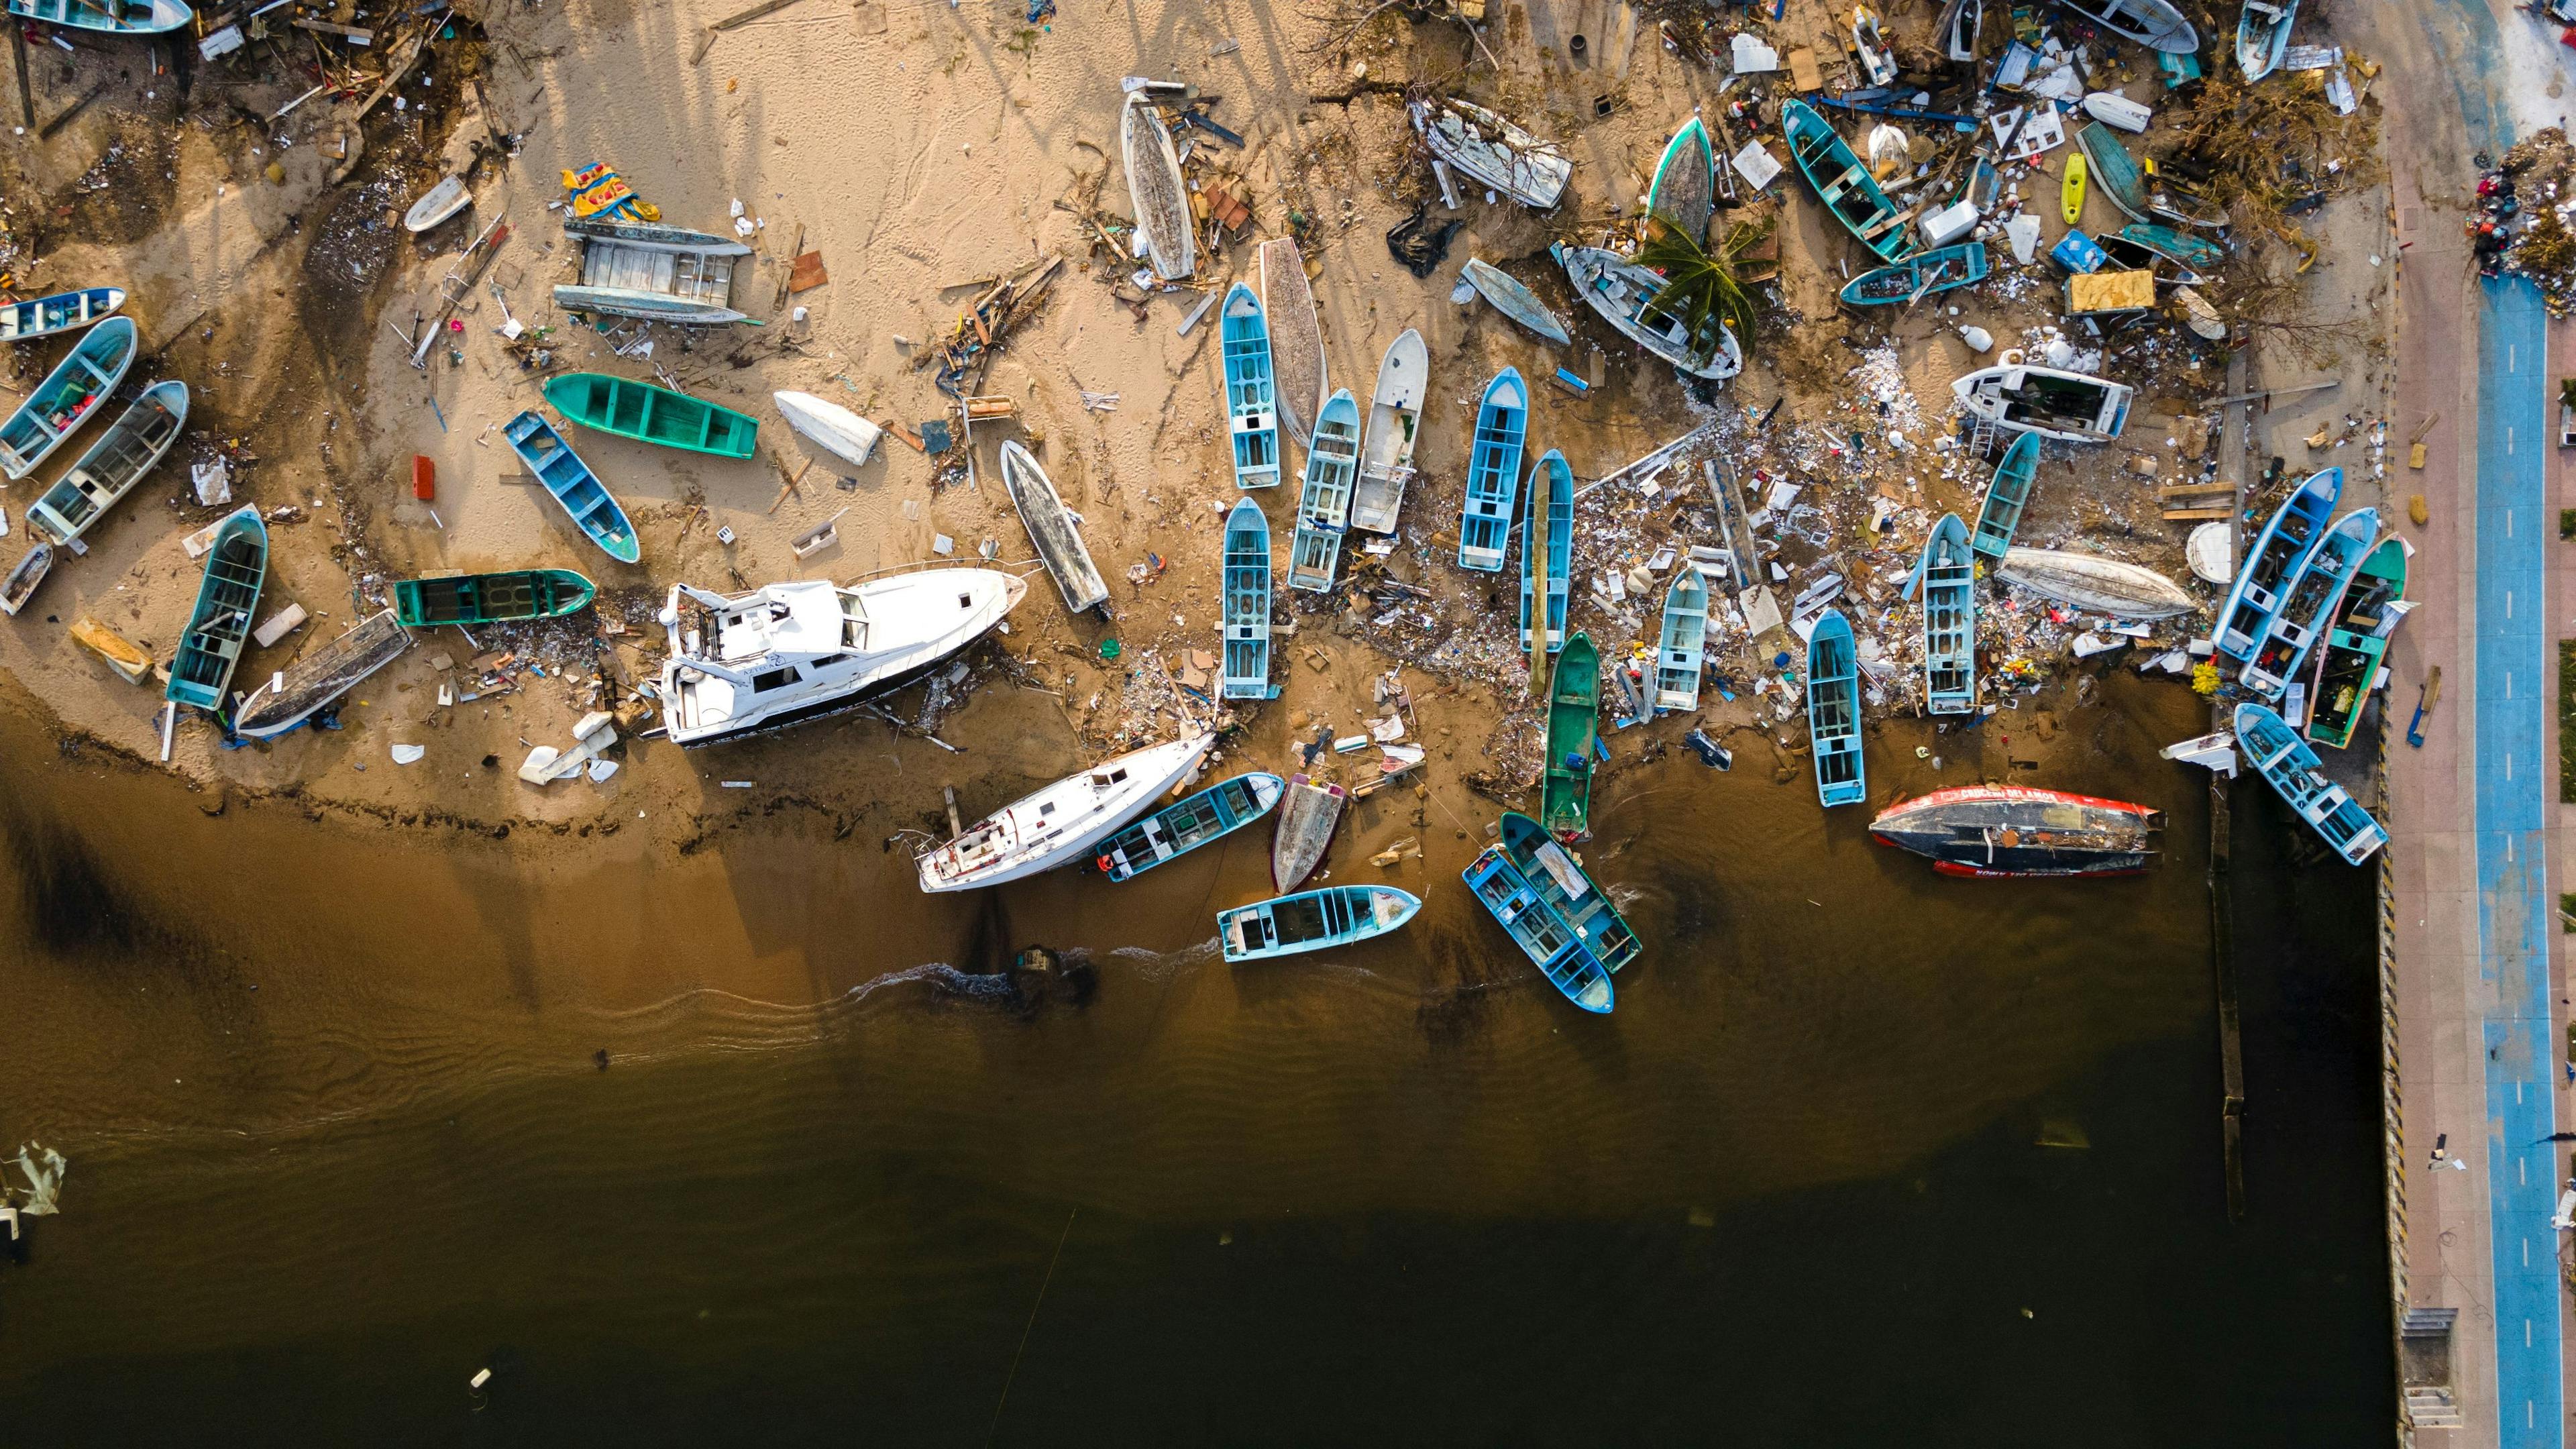 Hurricane damage to boats and shoreline | Macbeth GP - stock.adobe.com